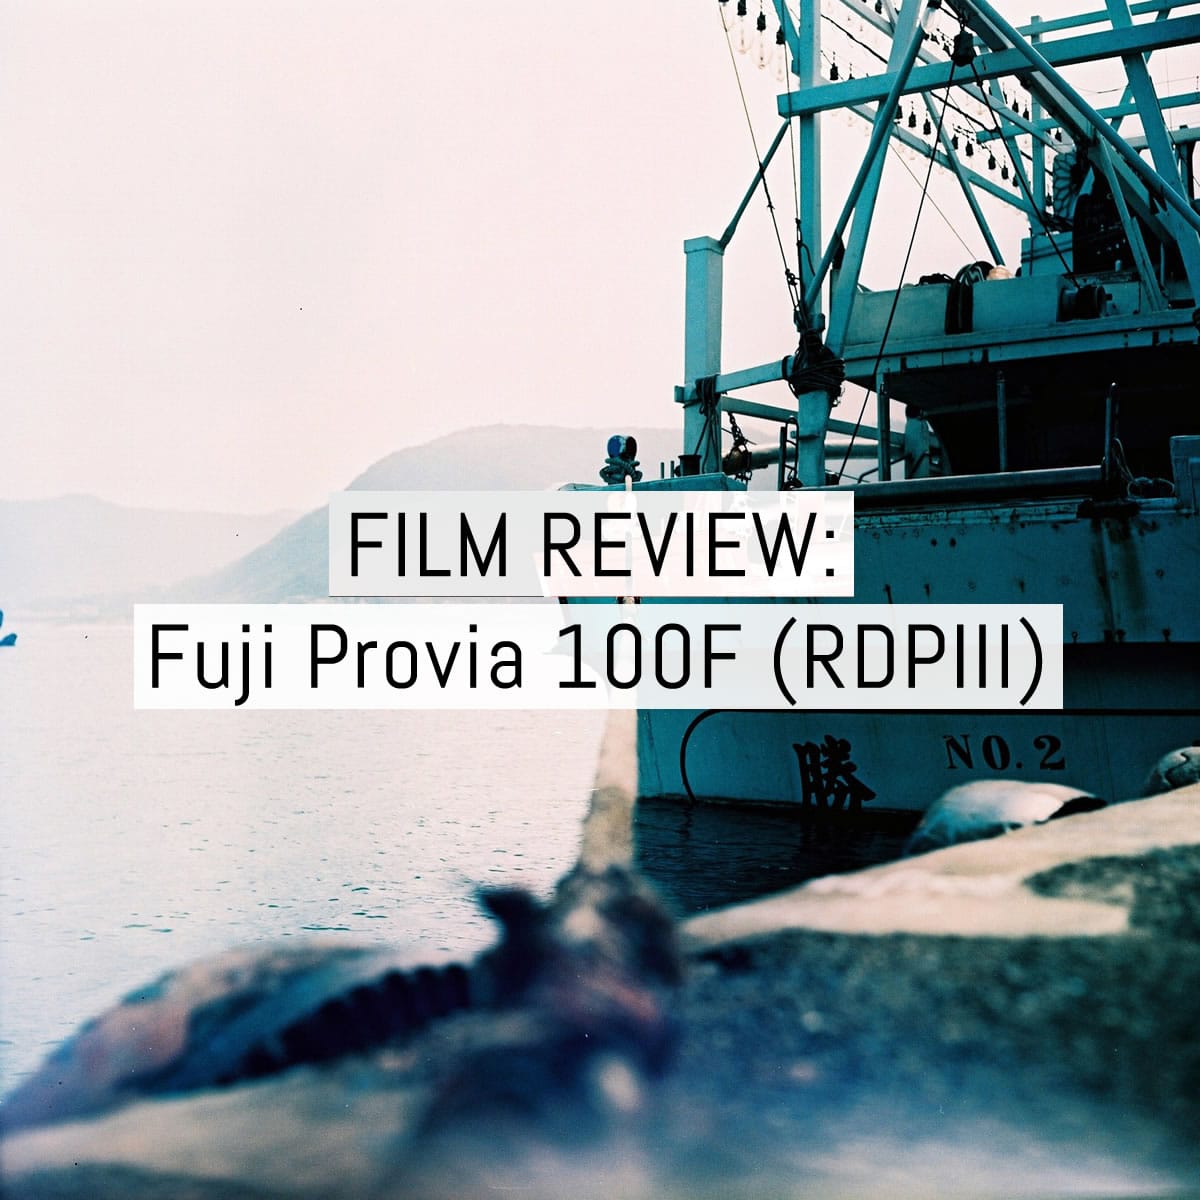 Profesional de Fuji Provia 100F rdpiii 5x4 película diapositiva de gran formato fechado 11/2020 